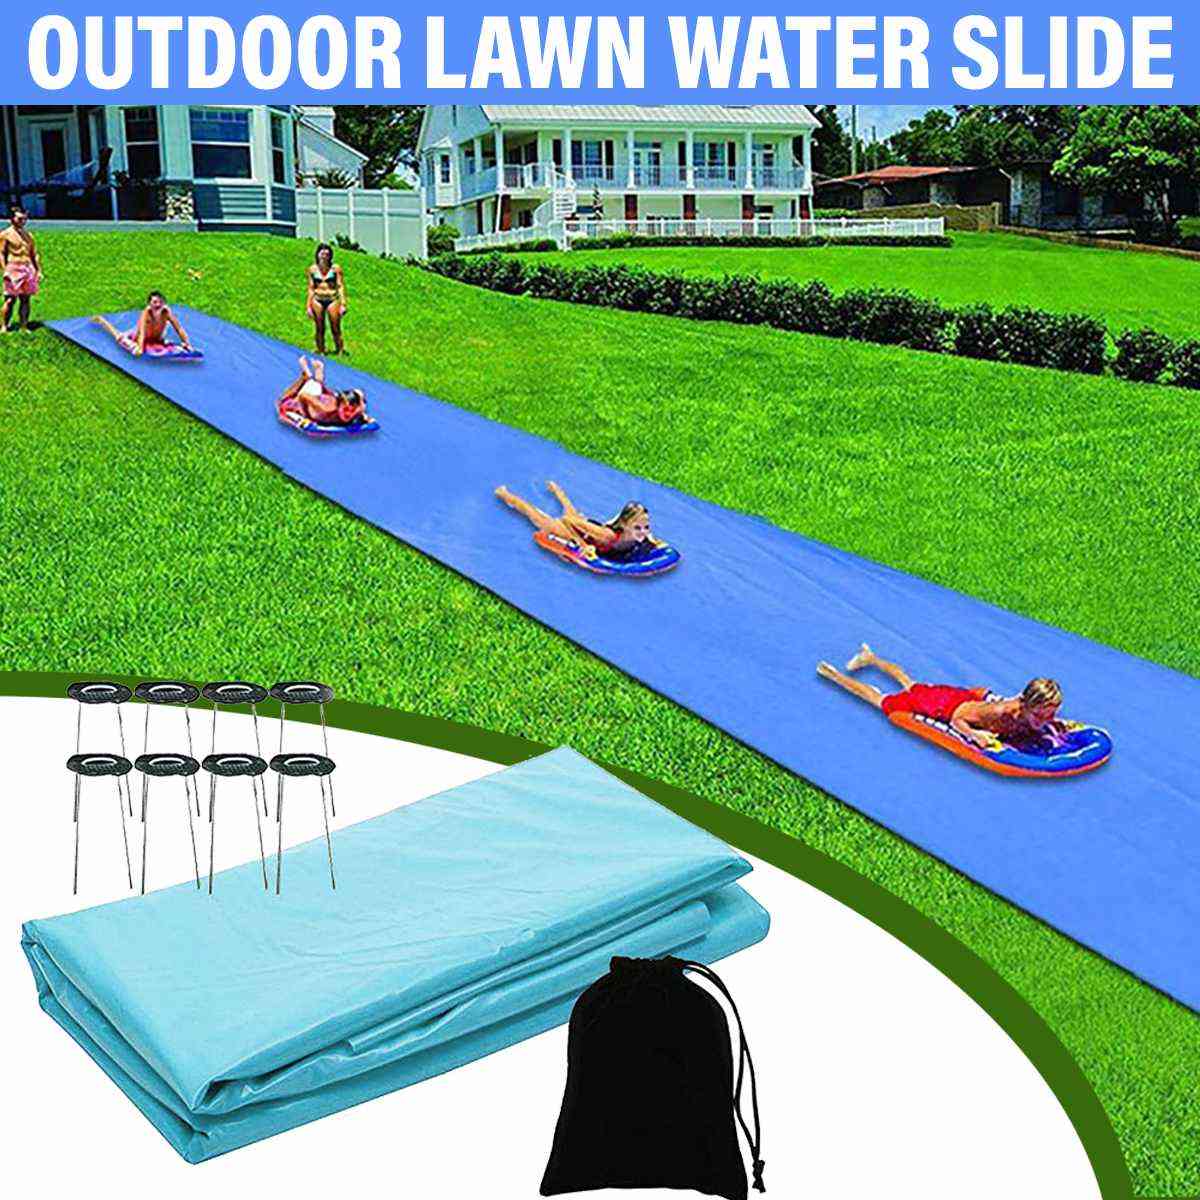 Summer- Lawn Water Slide, Garden Surf Racing, Lanes Outdoor, Fun Games